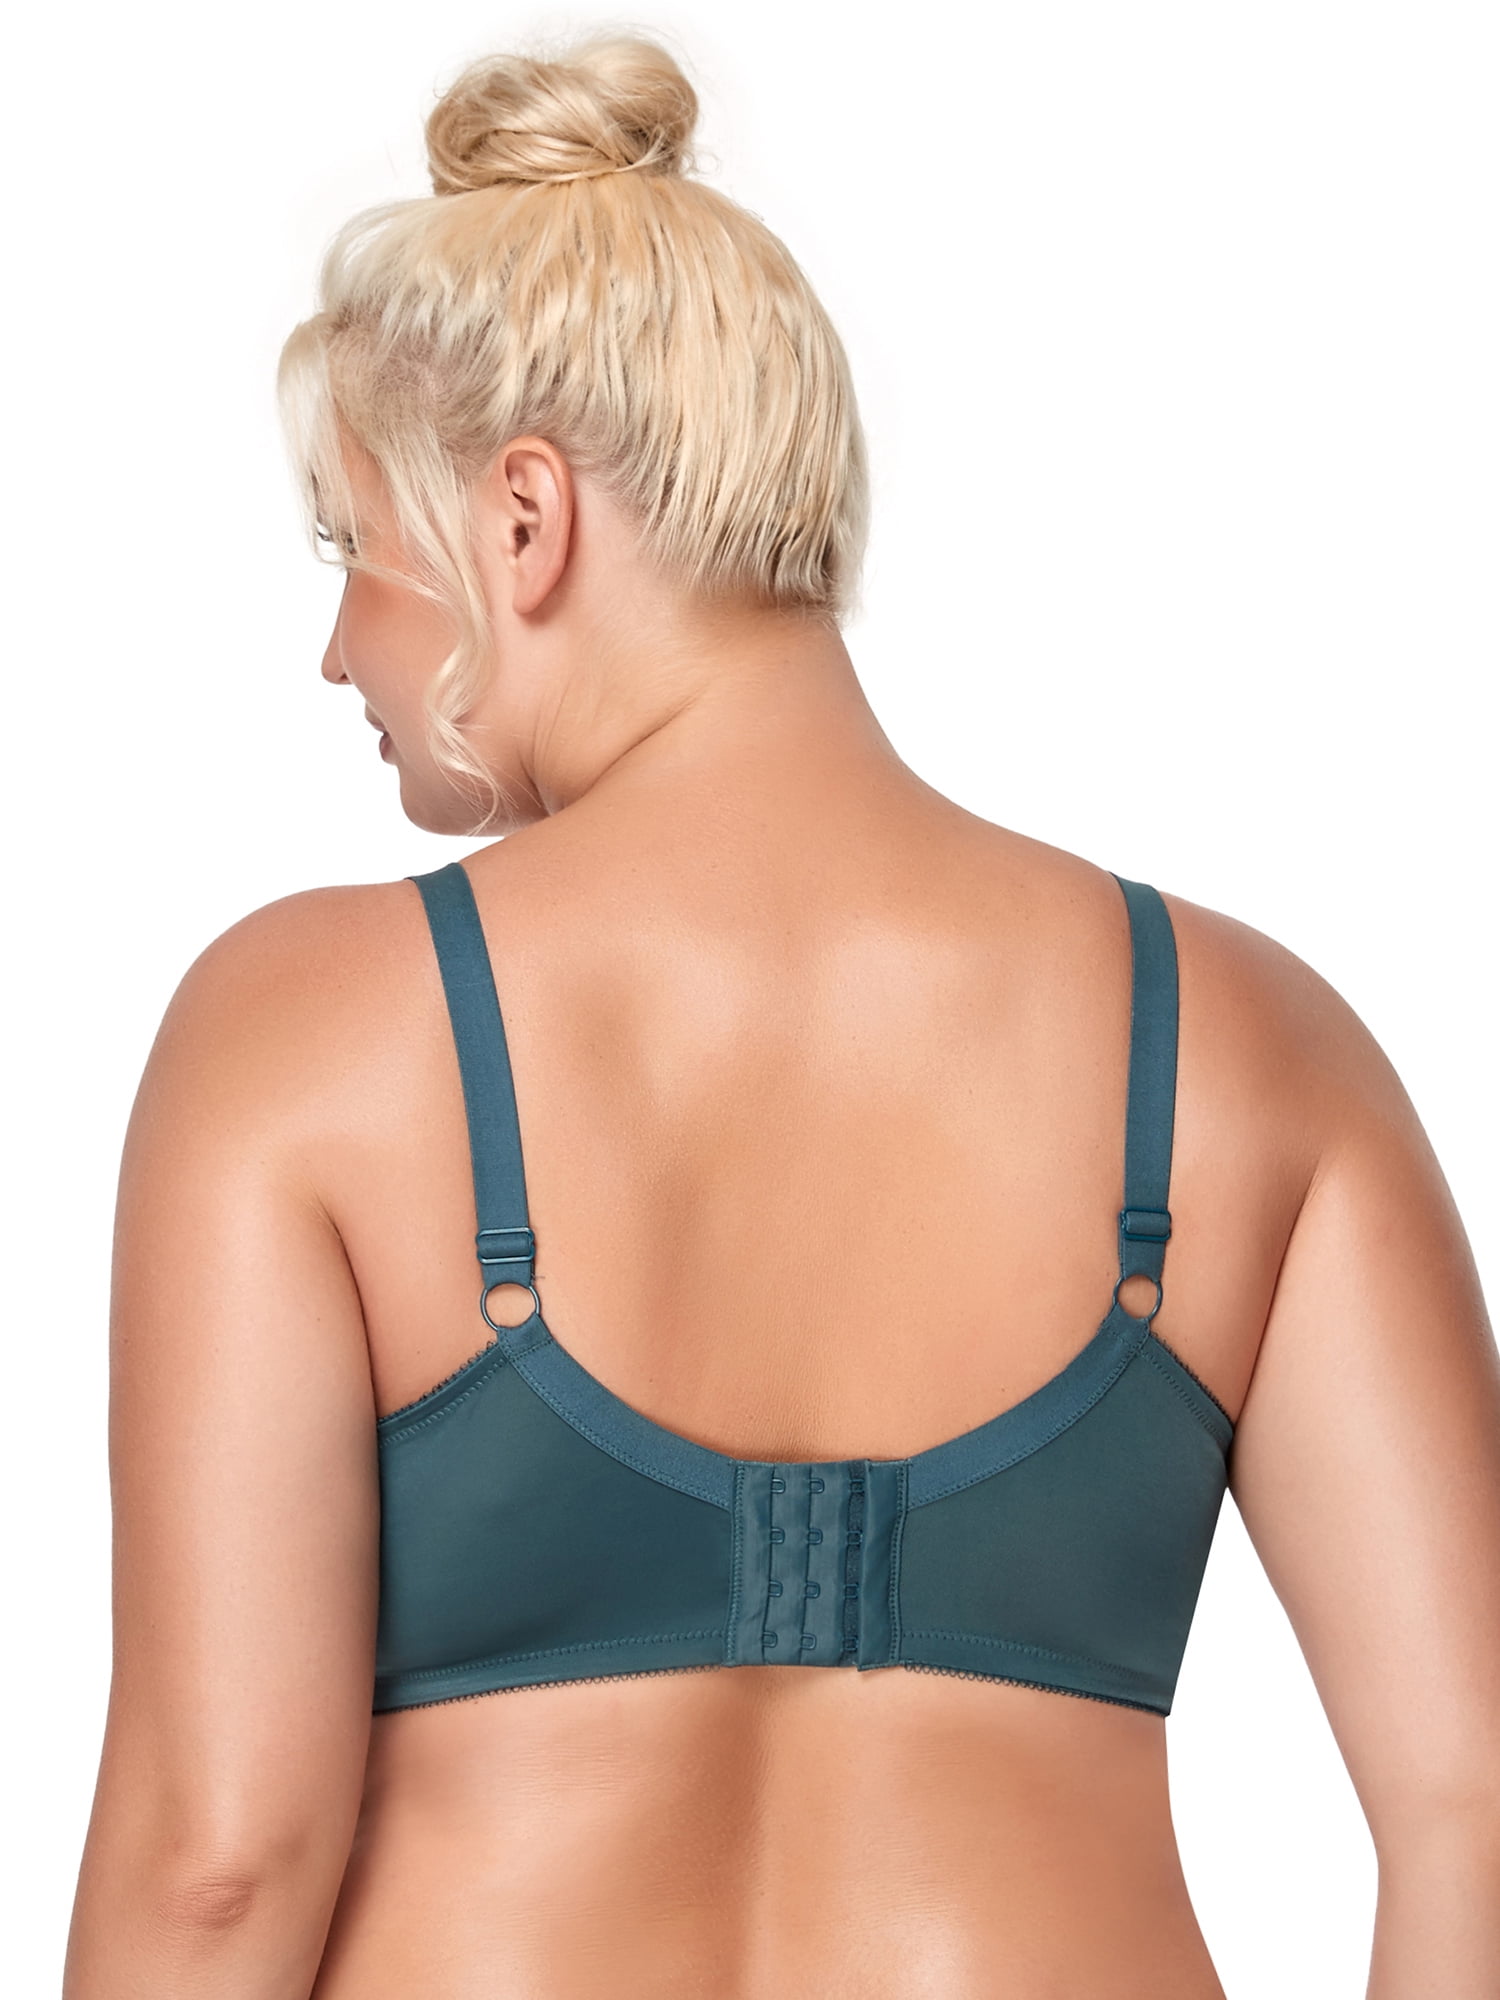 HSIA Plus Size Bras for Women Full Coverage Back Fat Underwire Unlined Bras  Dark Grey 40DDD 